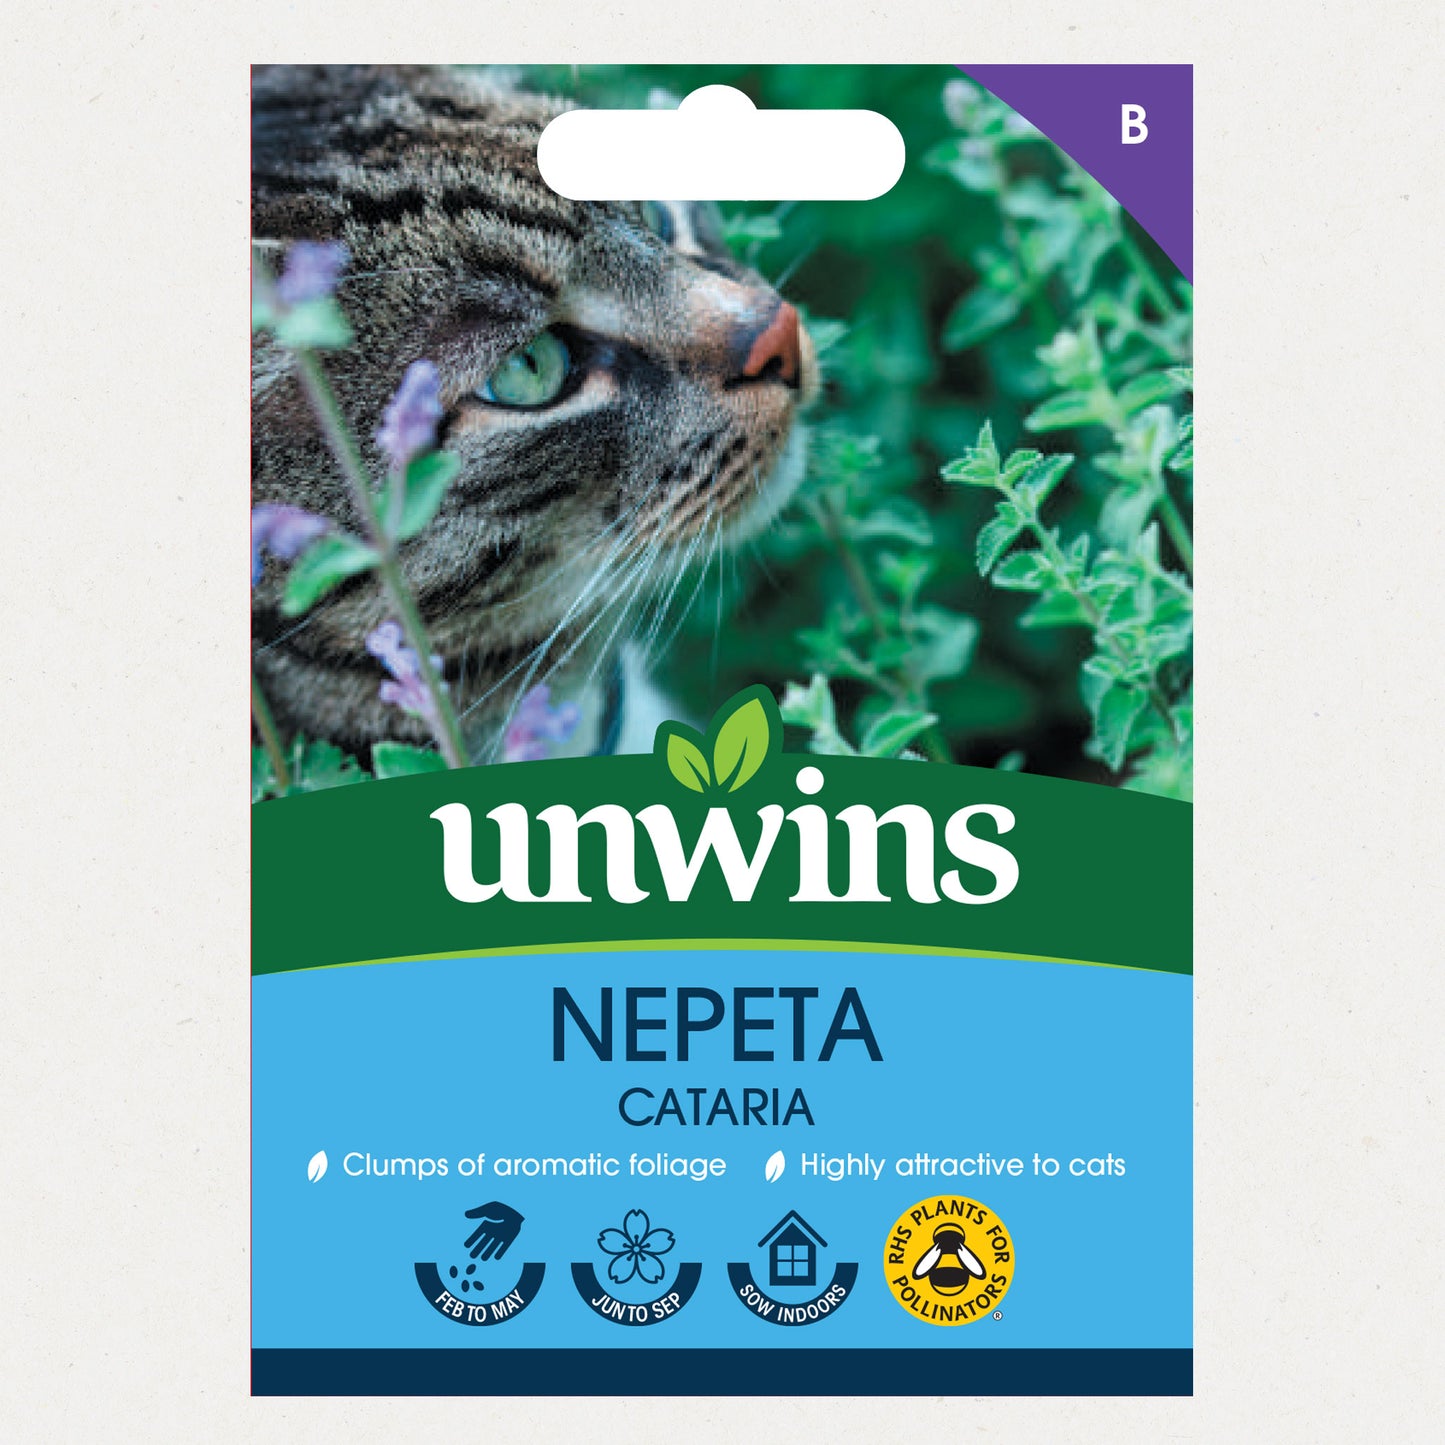 Unwins Nepeta Cataria Seeds Front